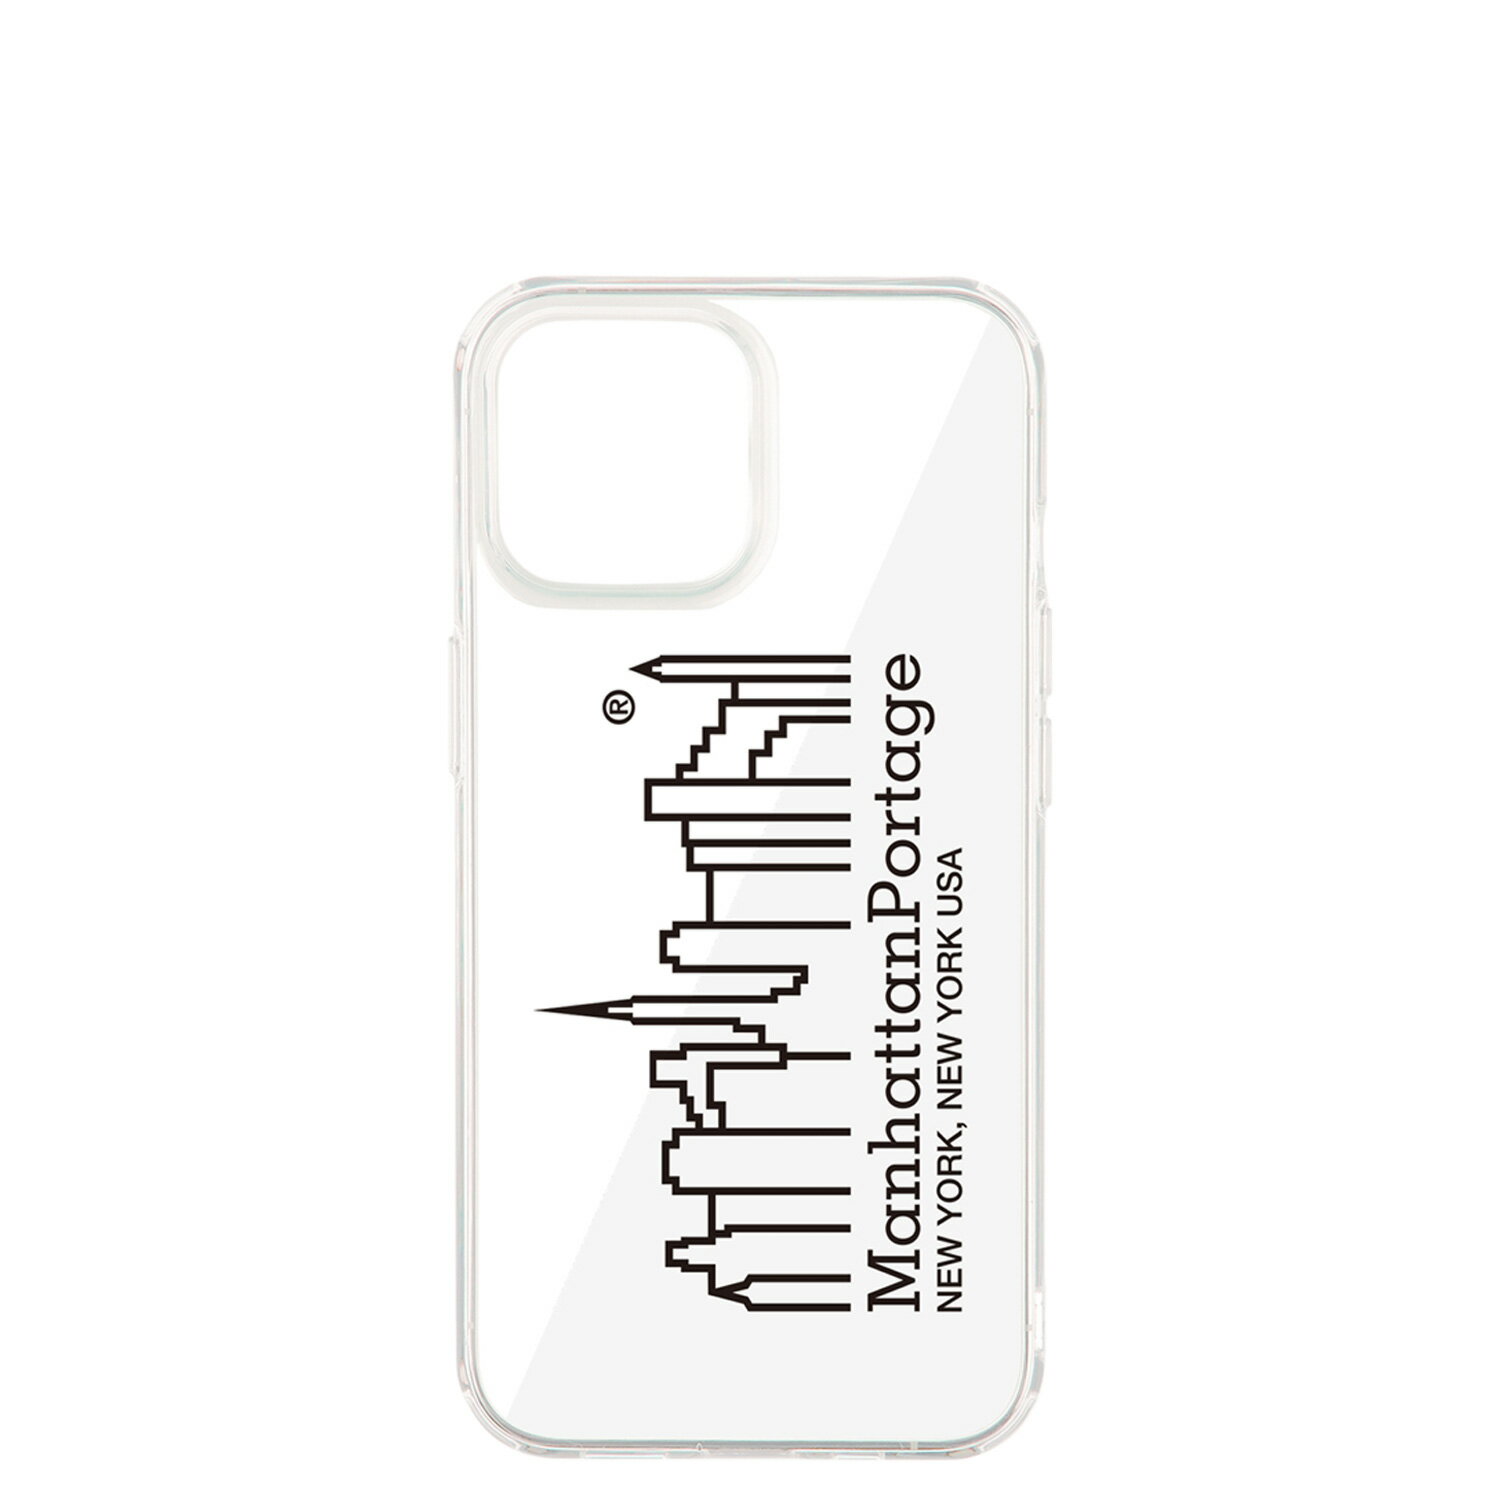 Manhattan Portage HYBRID CLEAR CASE マンハッタンポーテージ iPhone 13 mini スマホケース 携帯 アイフォン メンズ レディース 透明 クリア iP13MINI-HYB-CLEAR-BK 【 ネコポス可 】